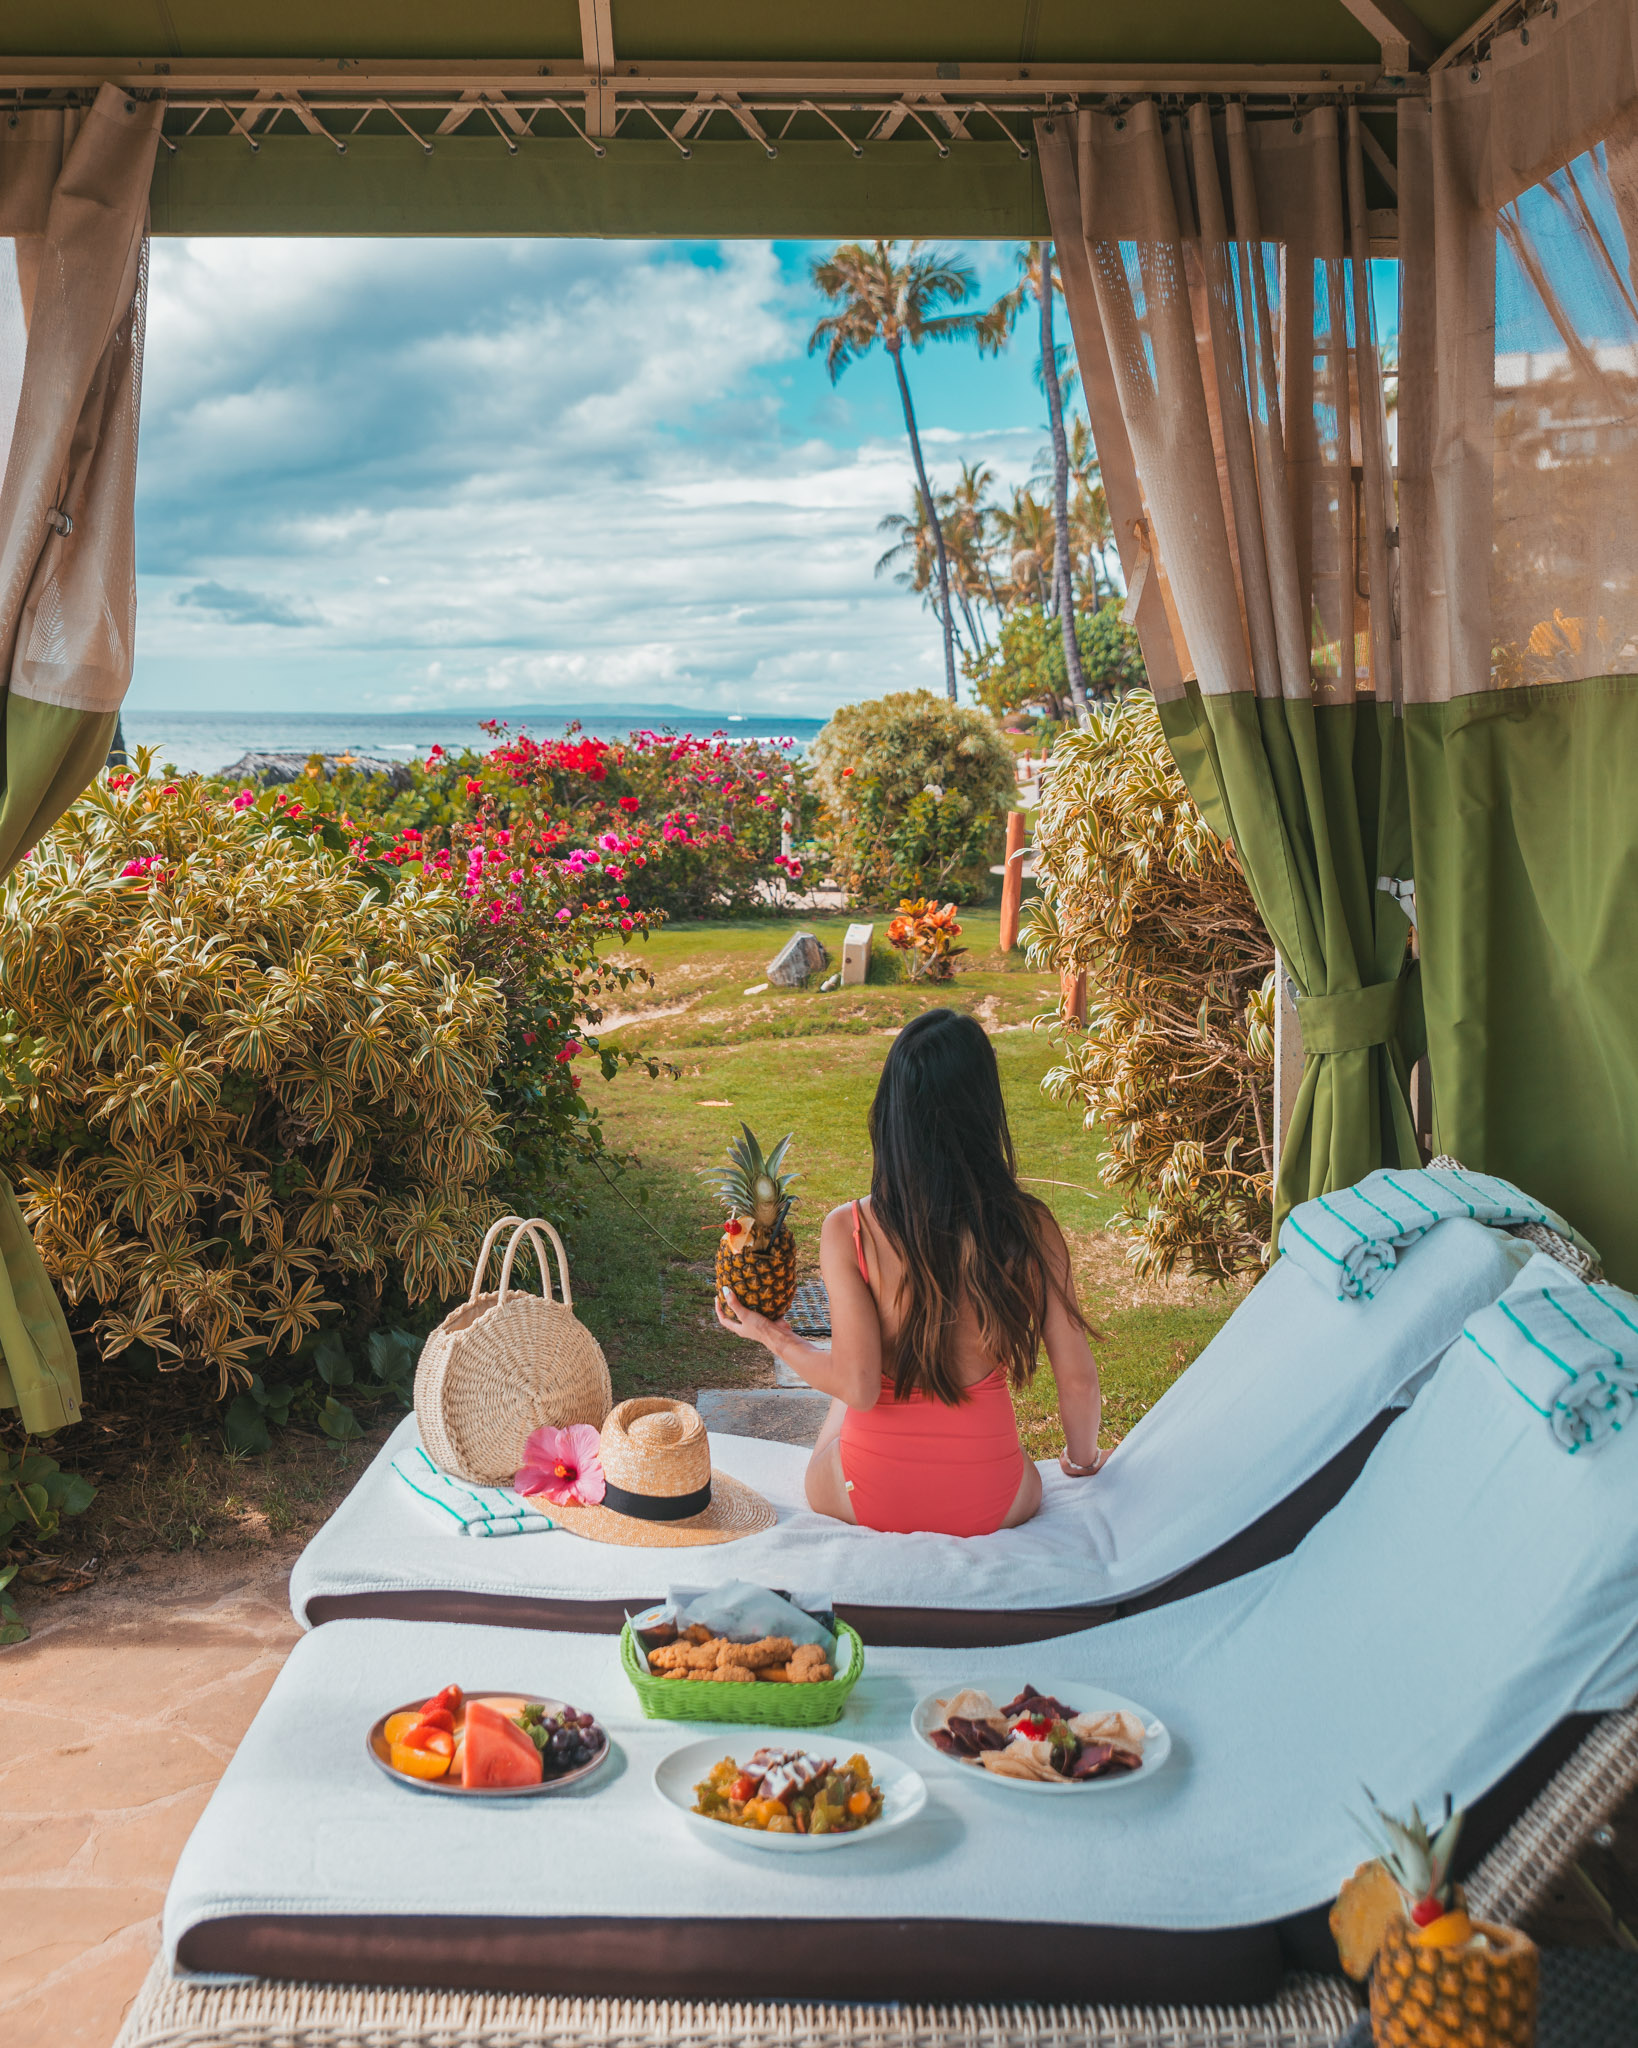 Ohana cabana by the pool at Hyatt Regency Maui // The Quick Guide to Visiting Maui, Hawaii #readysetjetset #hawaii #maui